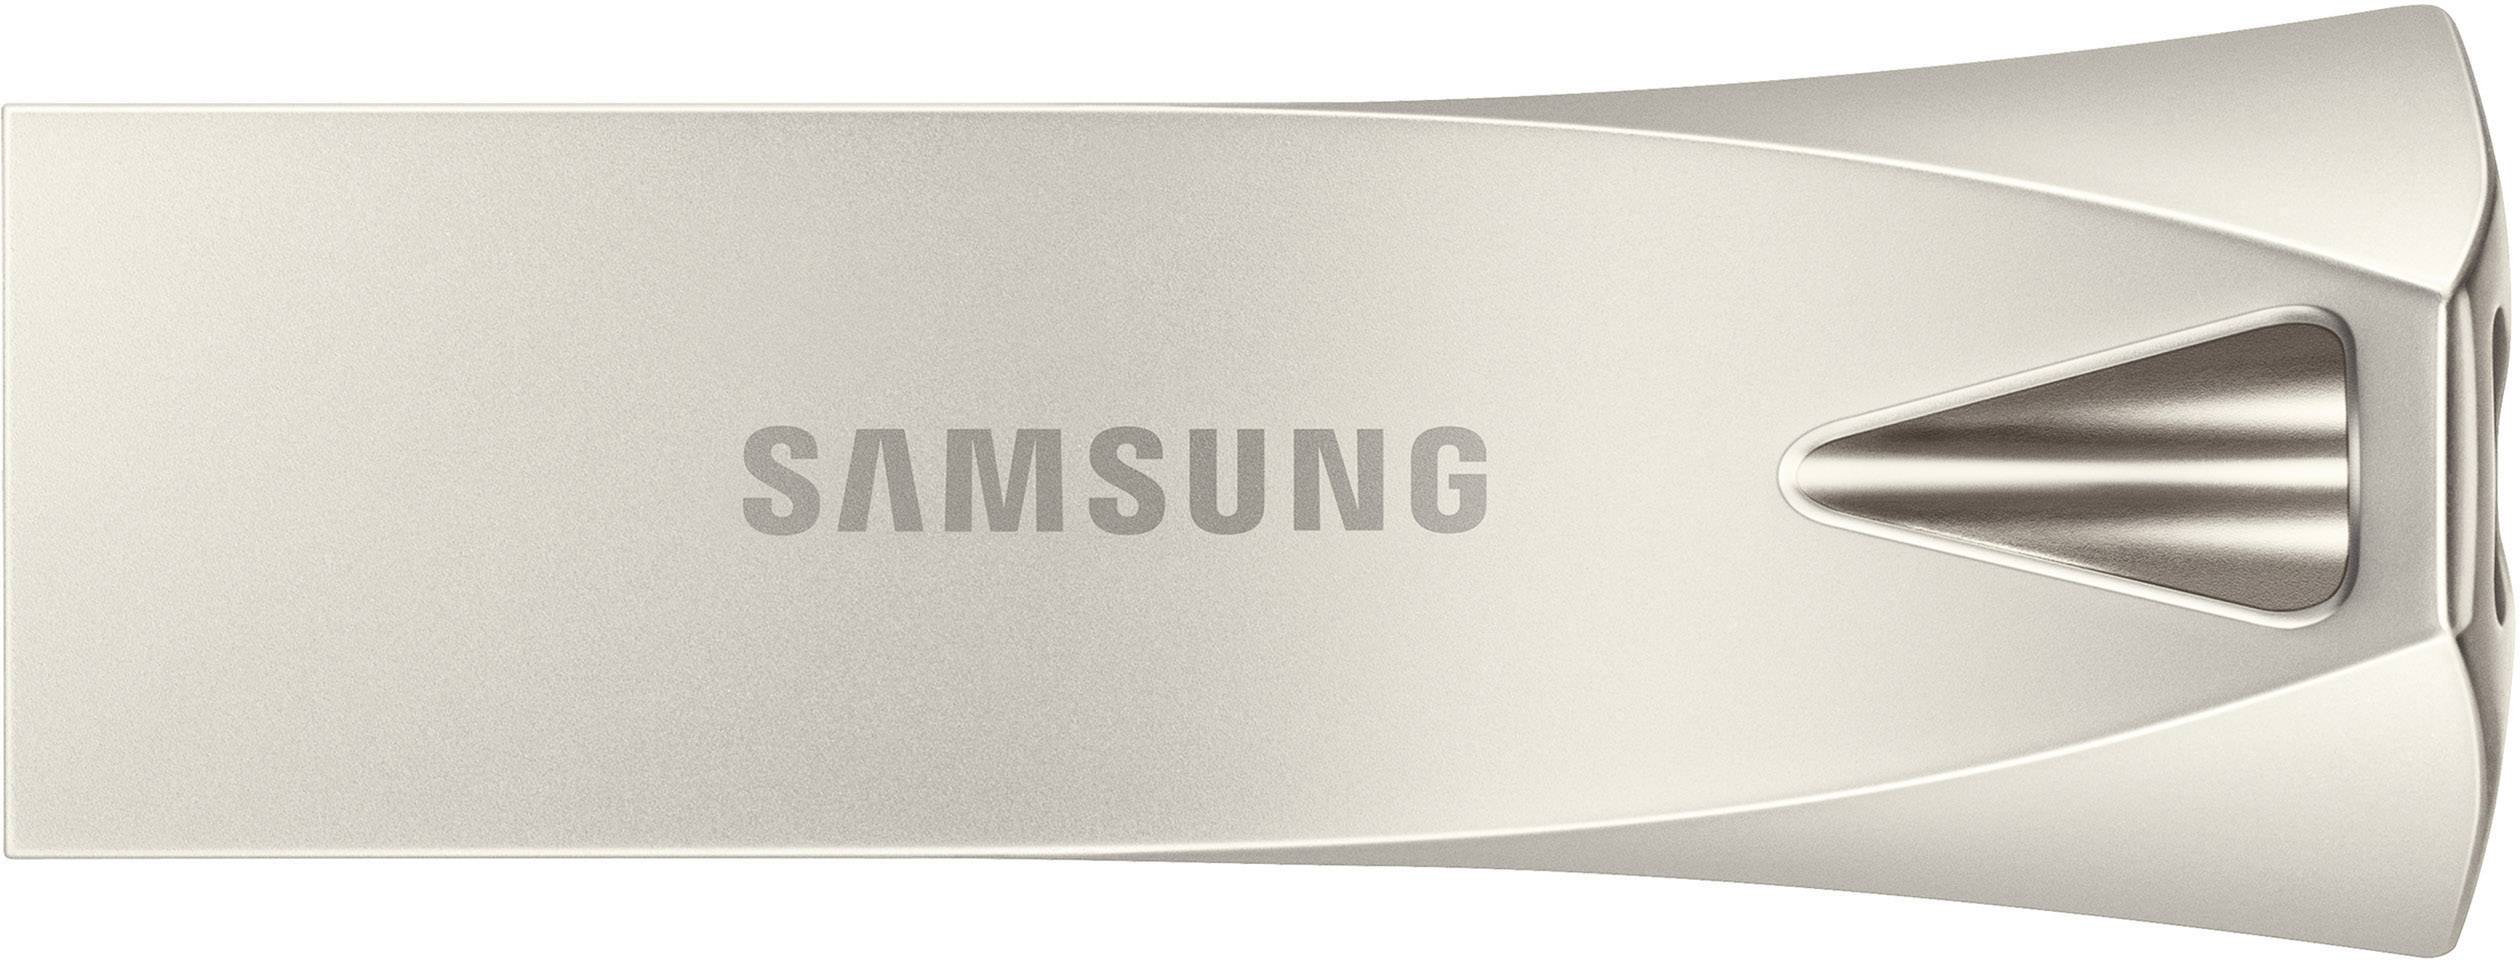 Samsung Usb Накопитель Bar Plus